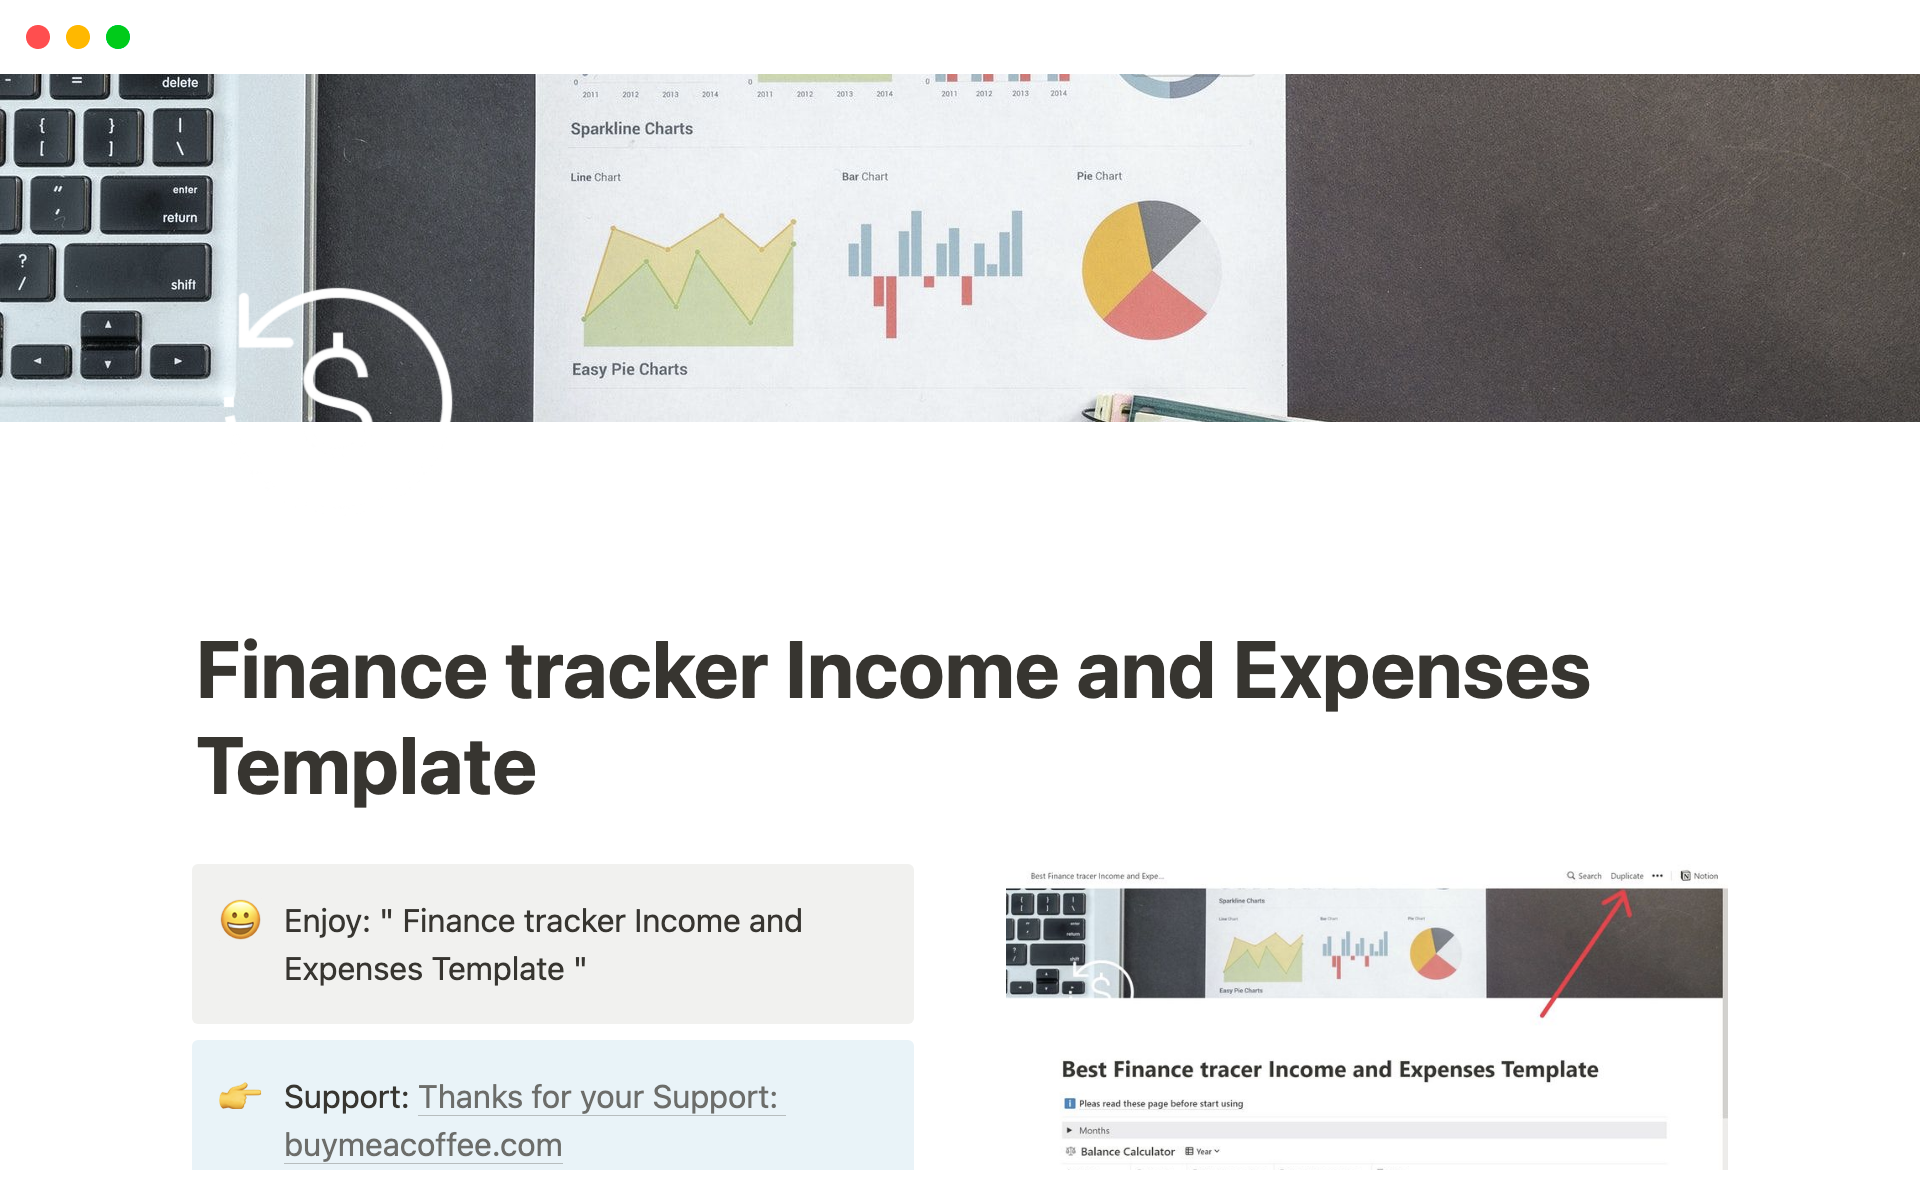 Mallin esikatselu nimelle Finance tracker Income and Expenses Template